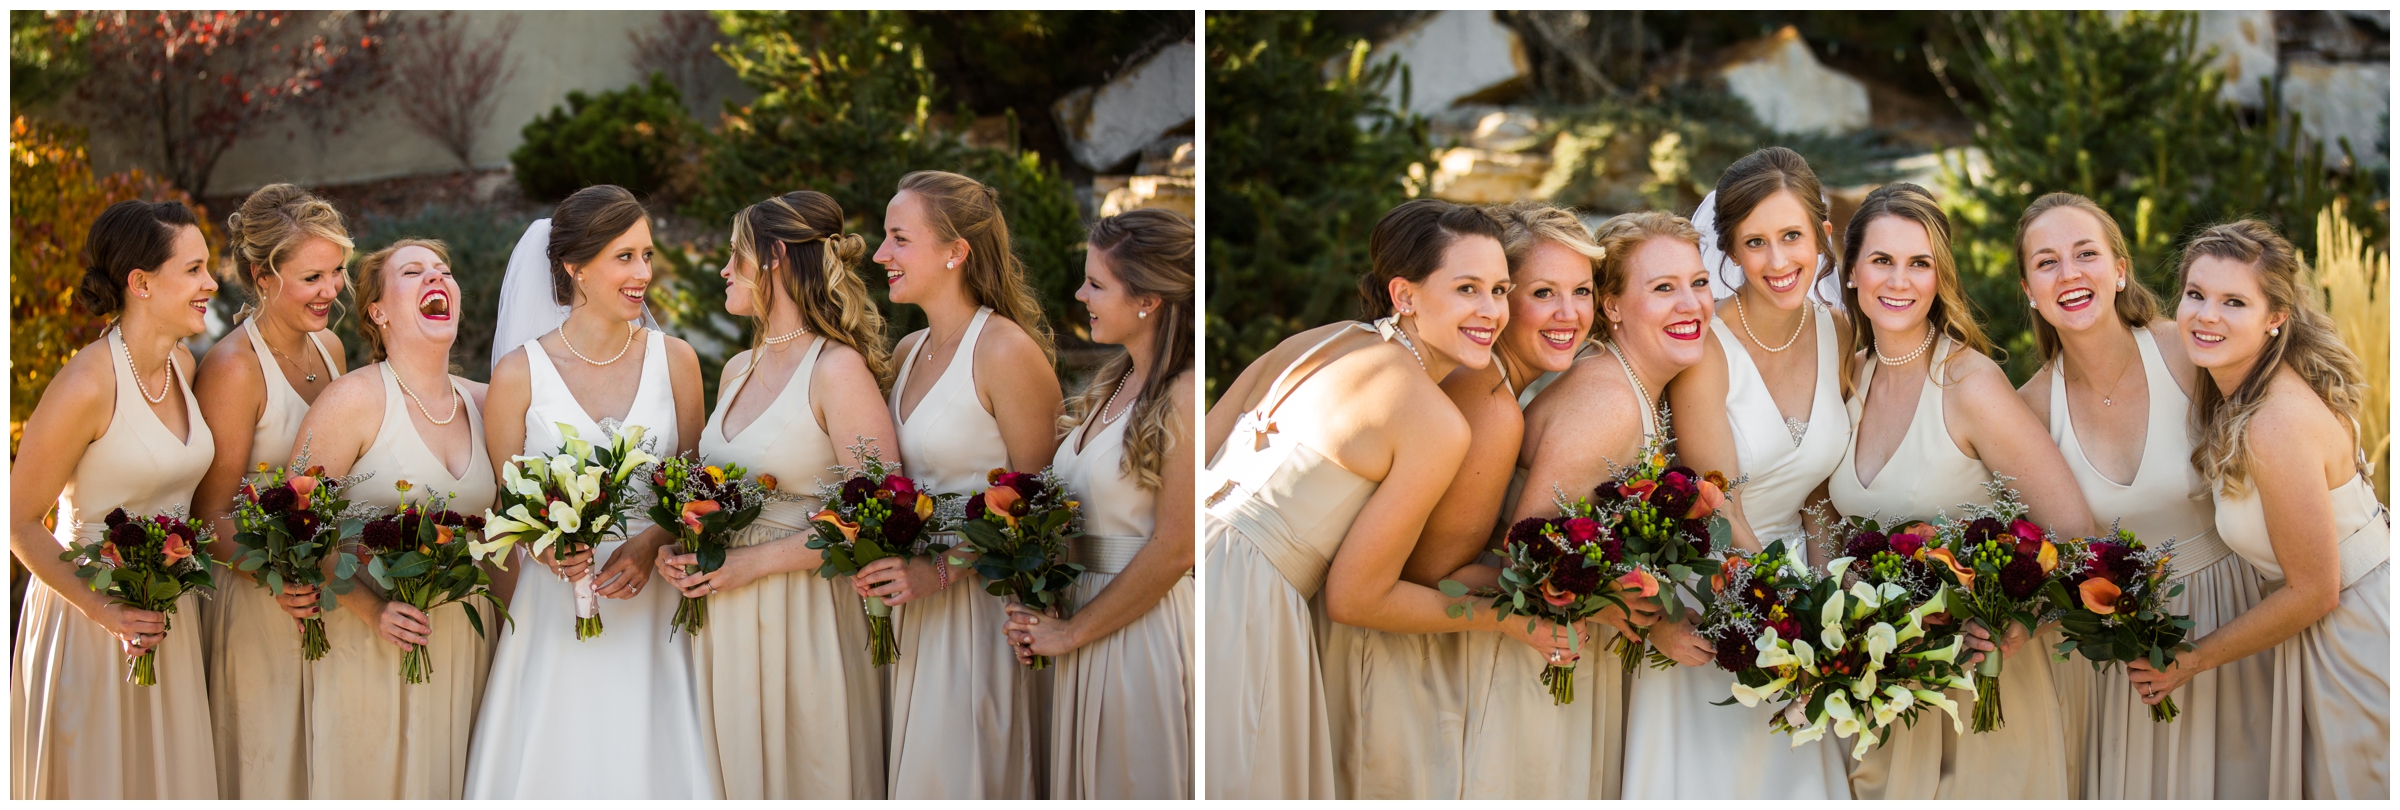 bridesmaids in long tan dresses at Colorado summer wedding